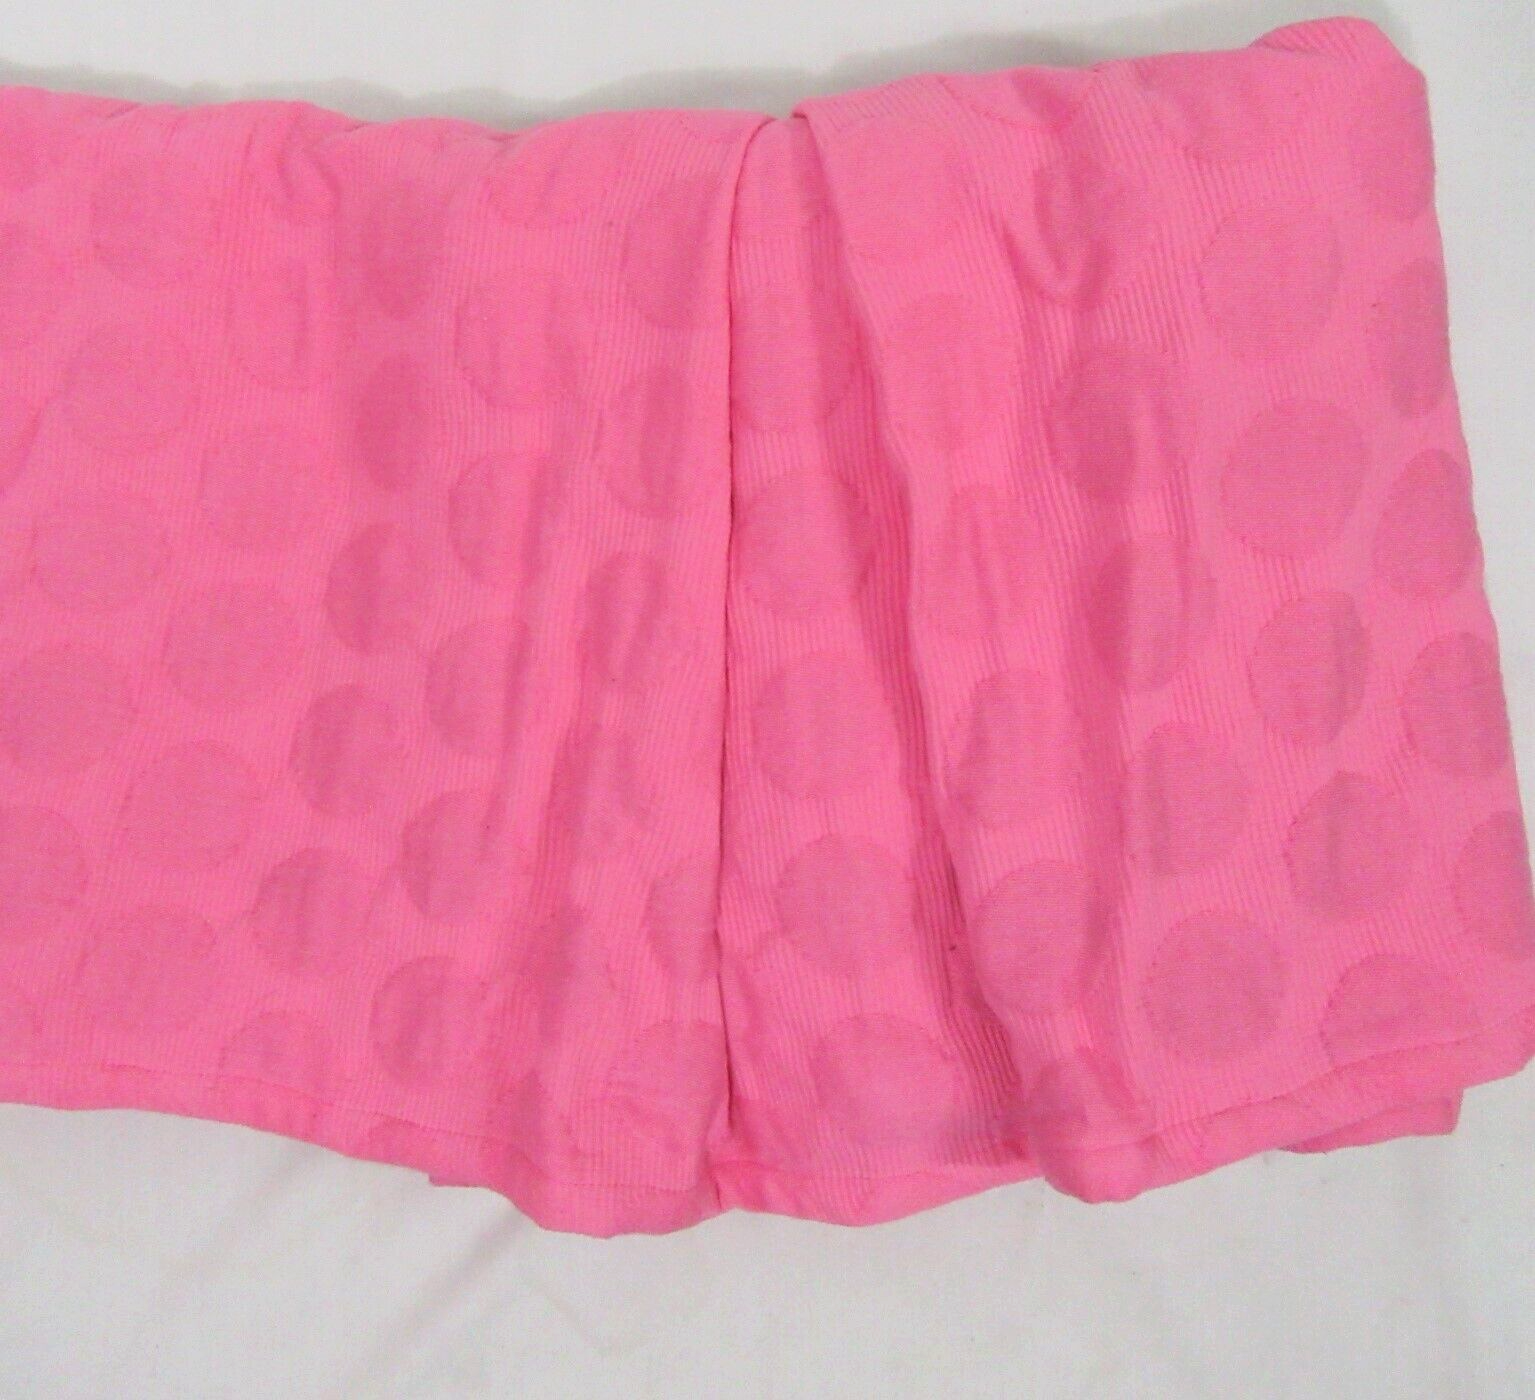 Pottery Barn Teen Big Dot Matelasse Hot Pink Tailored Twin X-Long Bed-Skirt - $38.00